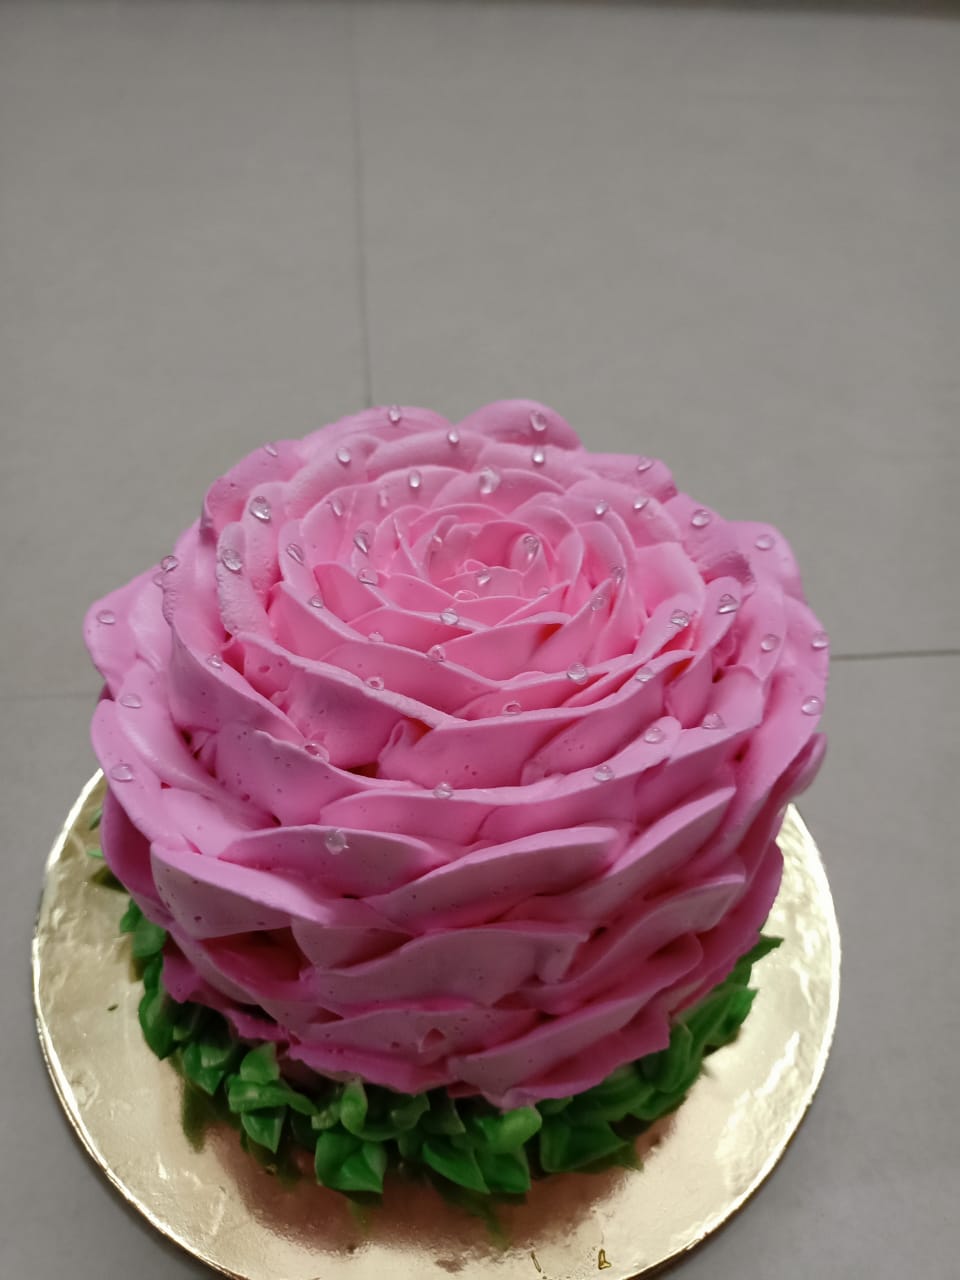 Aggregate 69+ rose theme cake best